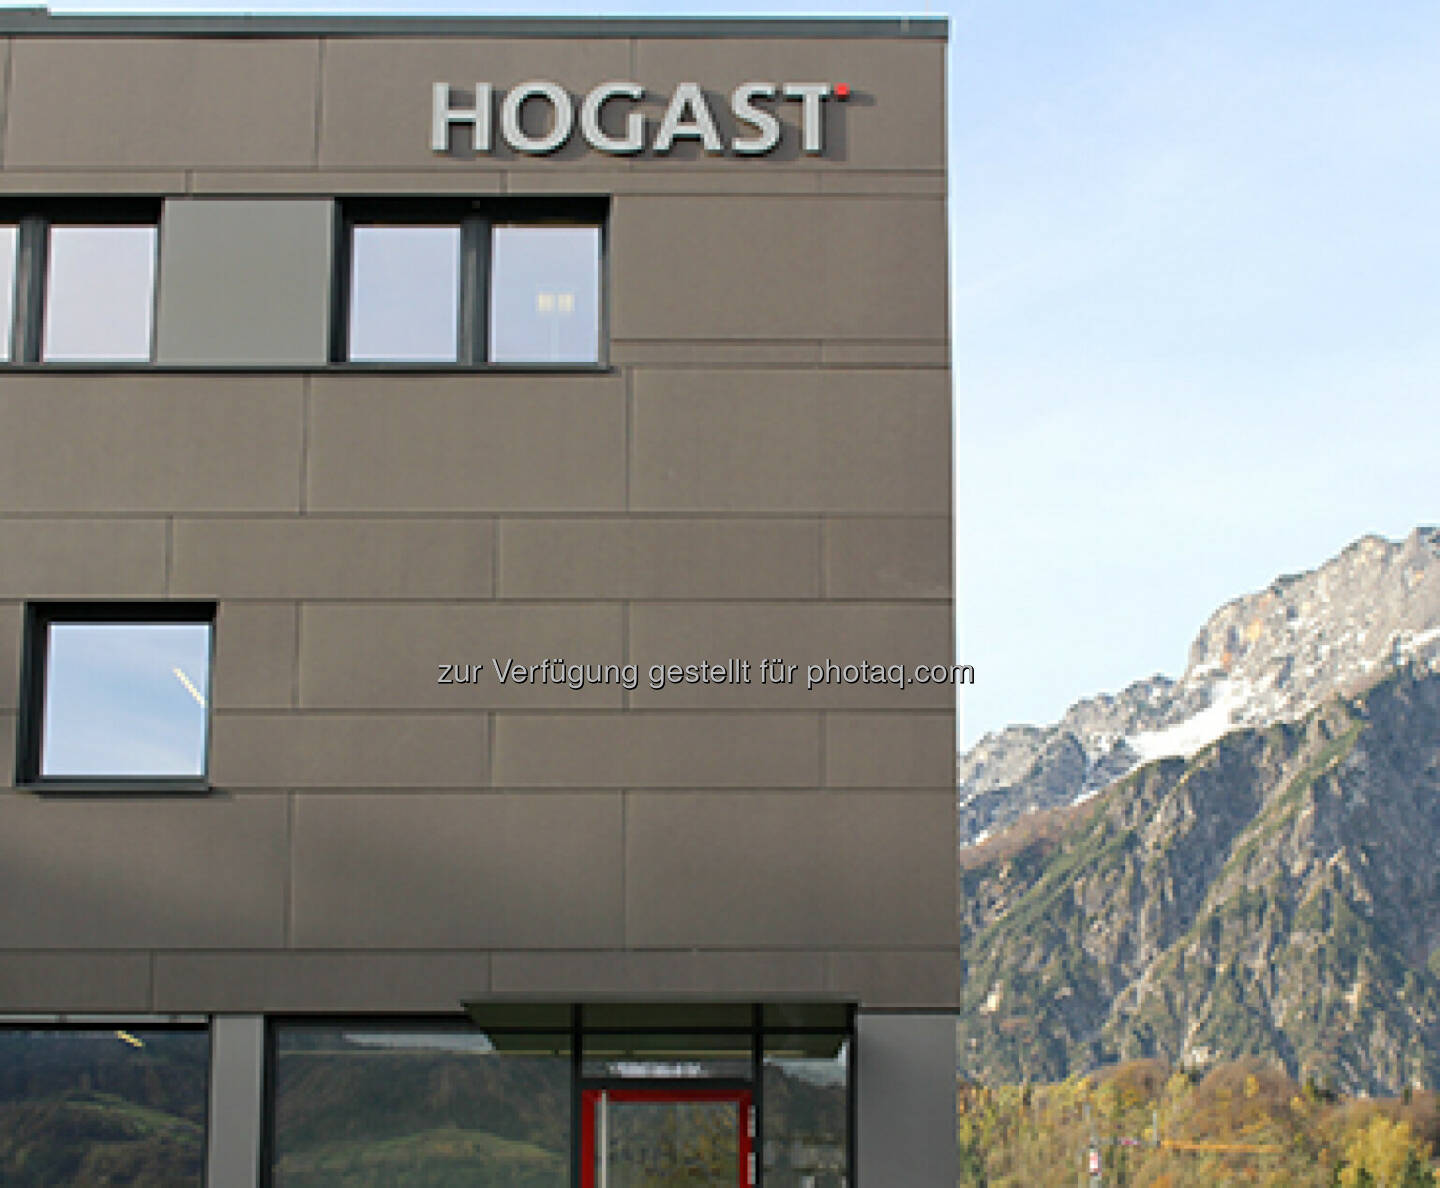 Hogast Headquarter (Bild: Hogast)